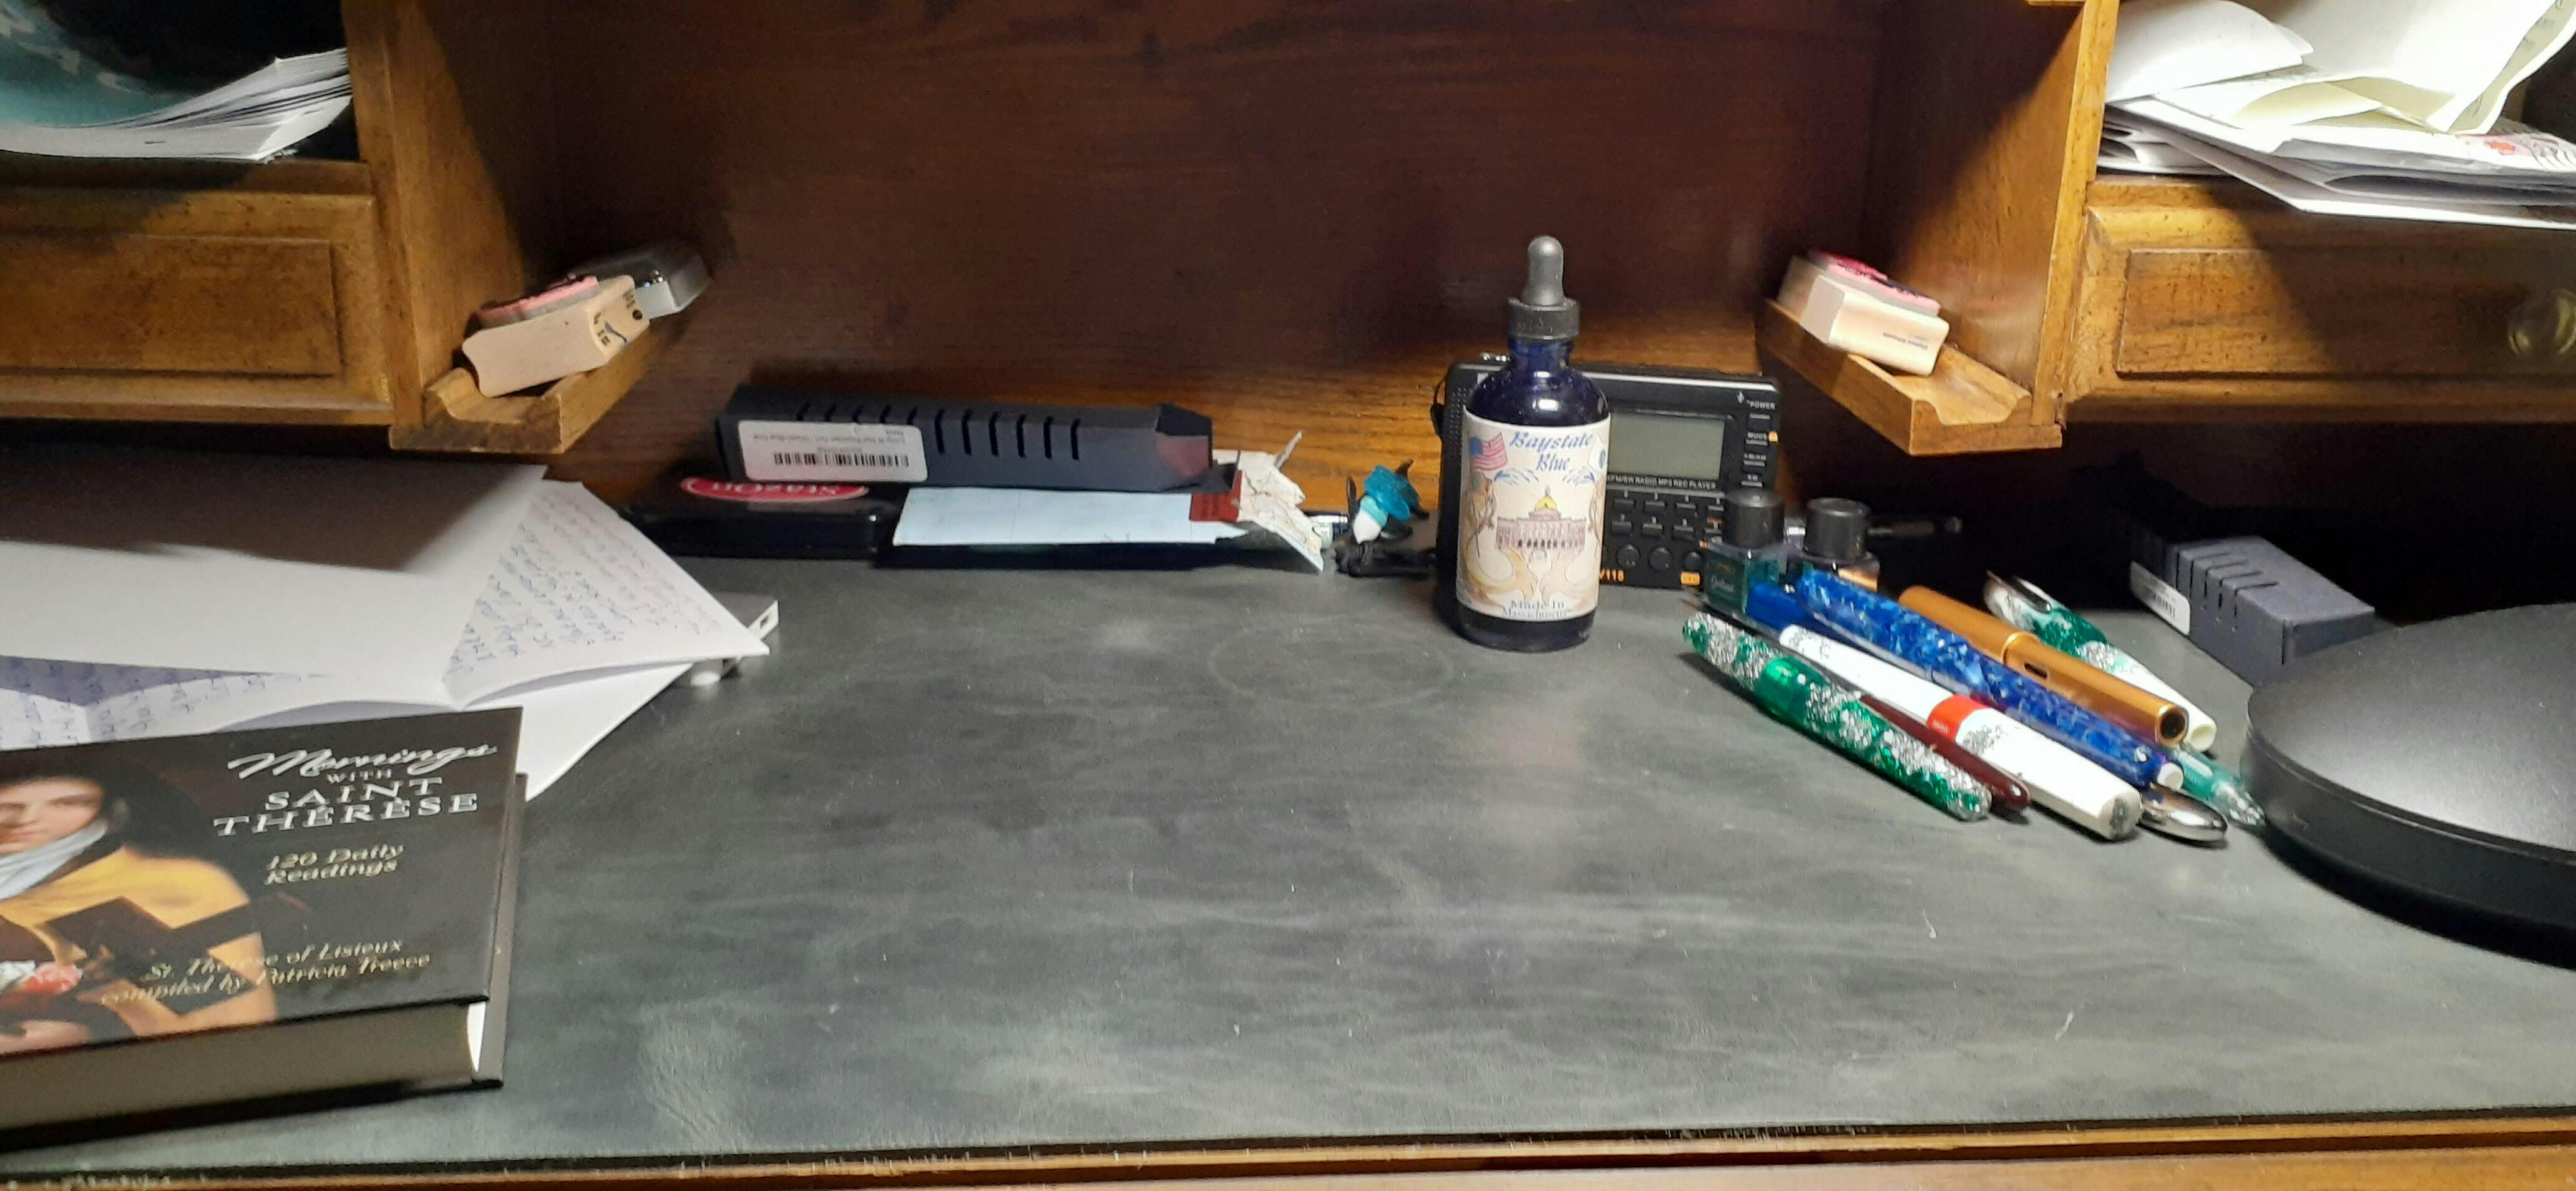 gallaway leather desk pad